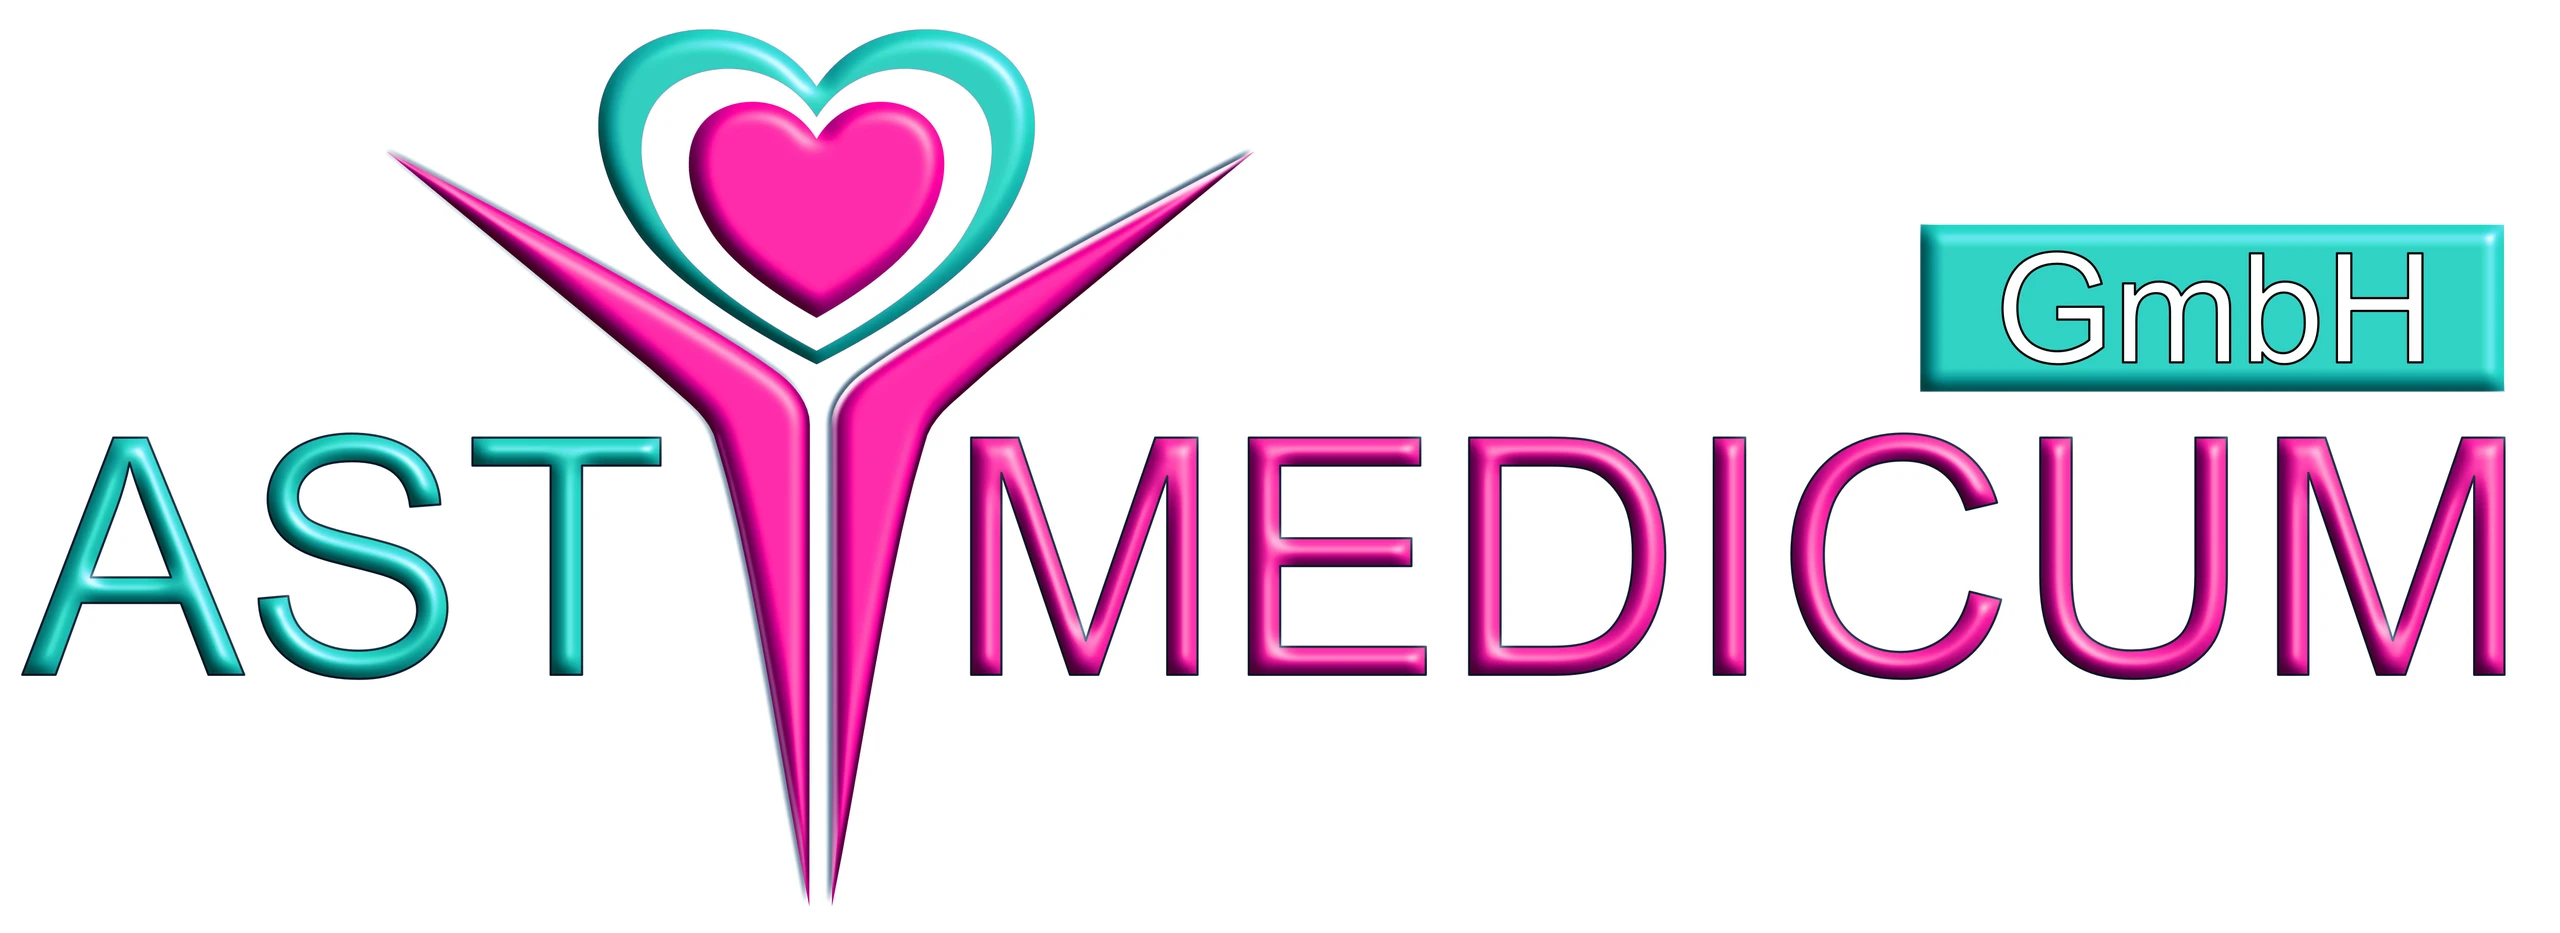 Logo: Ast Medicum GmbH